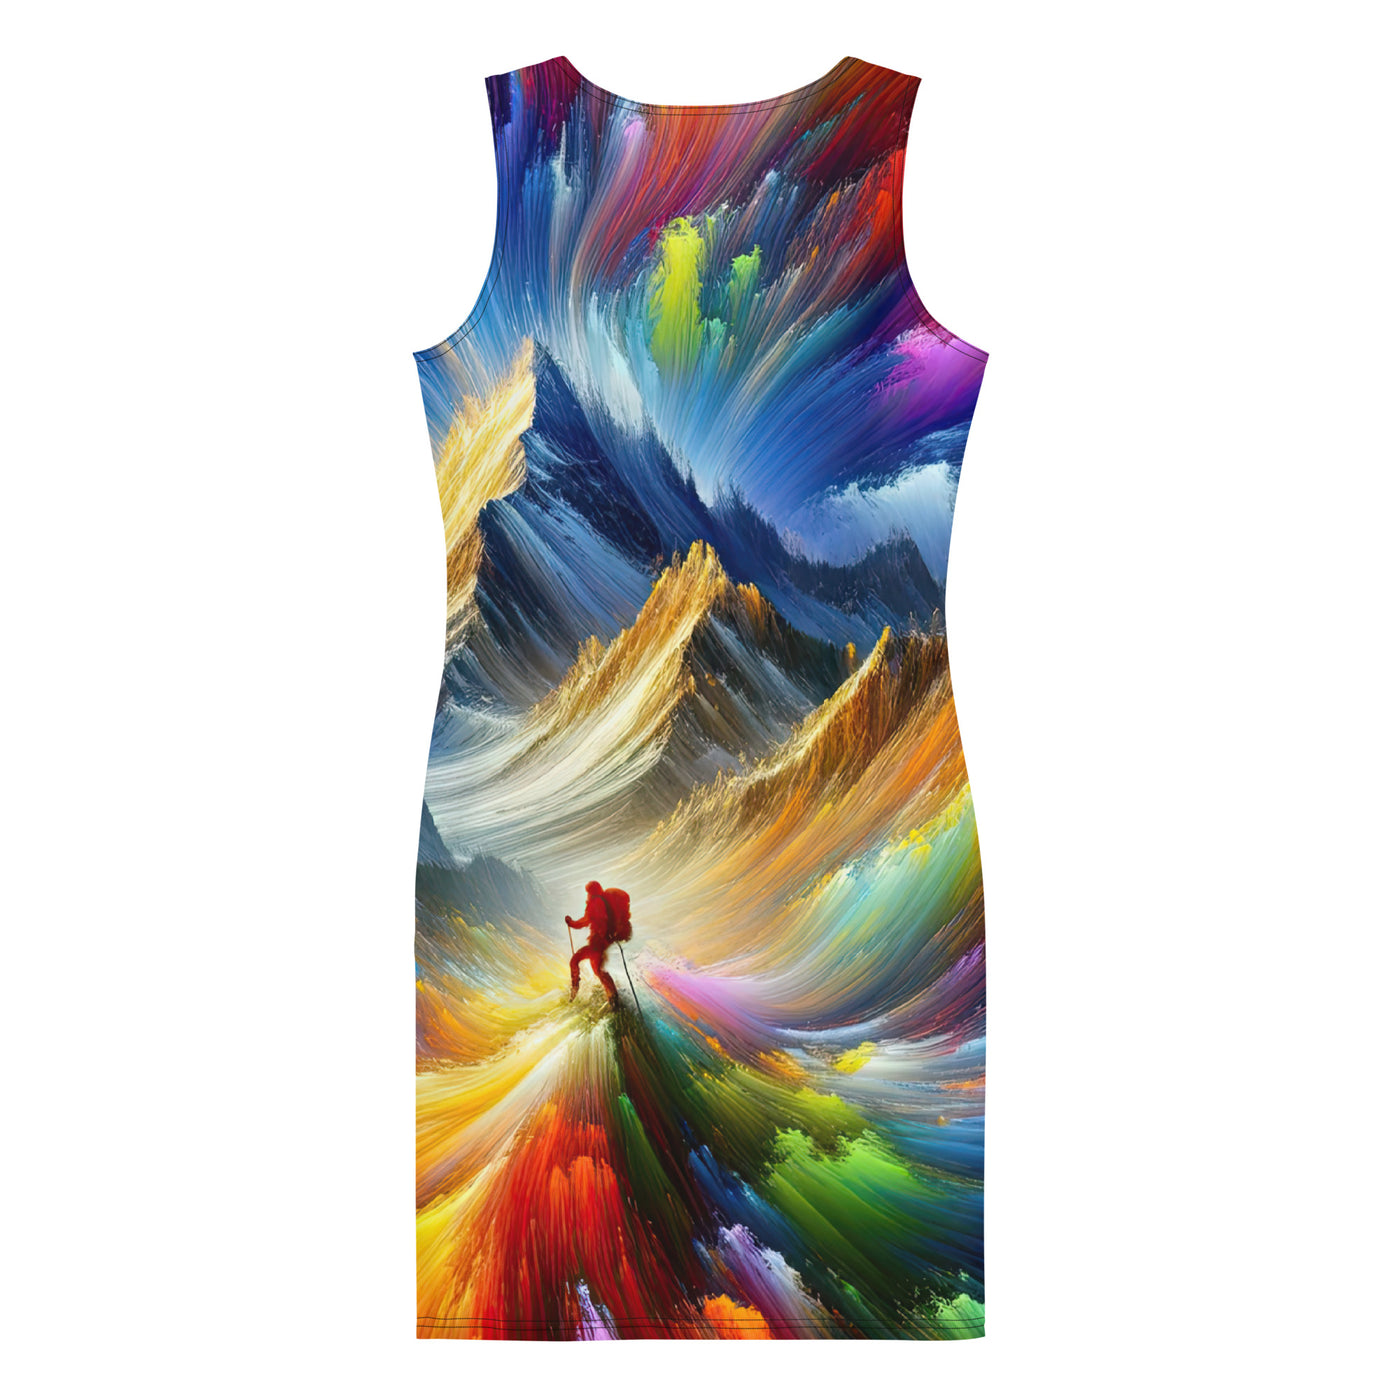 Alpen im Farbsturm mit erleuchtetem Wanderer - Abstrakt - Langes Damen Kleid (All-Over Print) wandern xxx yyy zzz